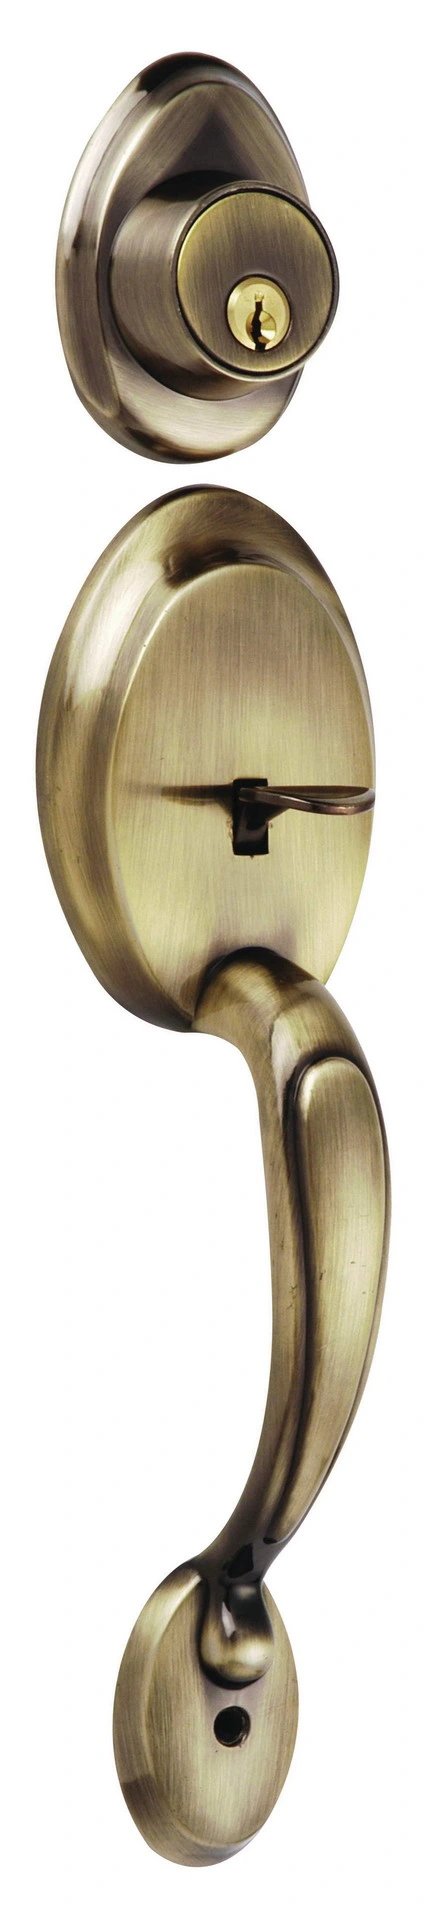 7051pb Door Lock, Grip Handle Lock. Handle Lockset, Top Seller Handle